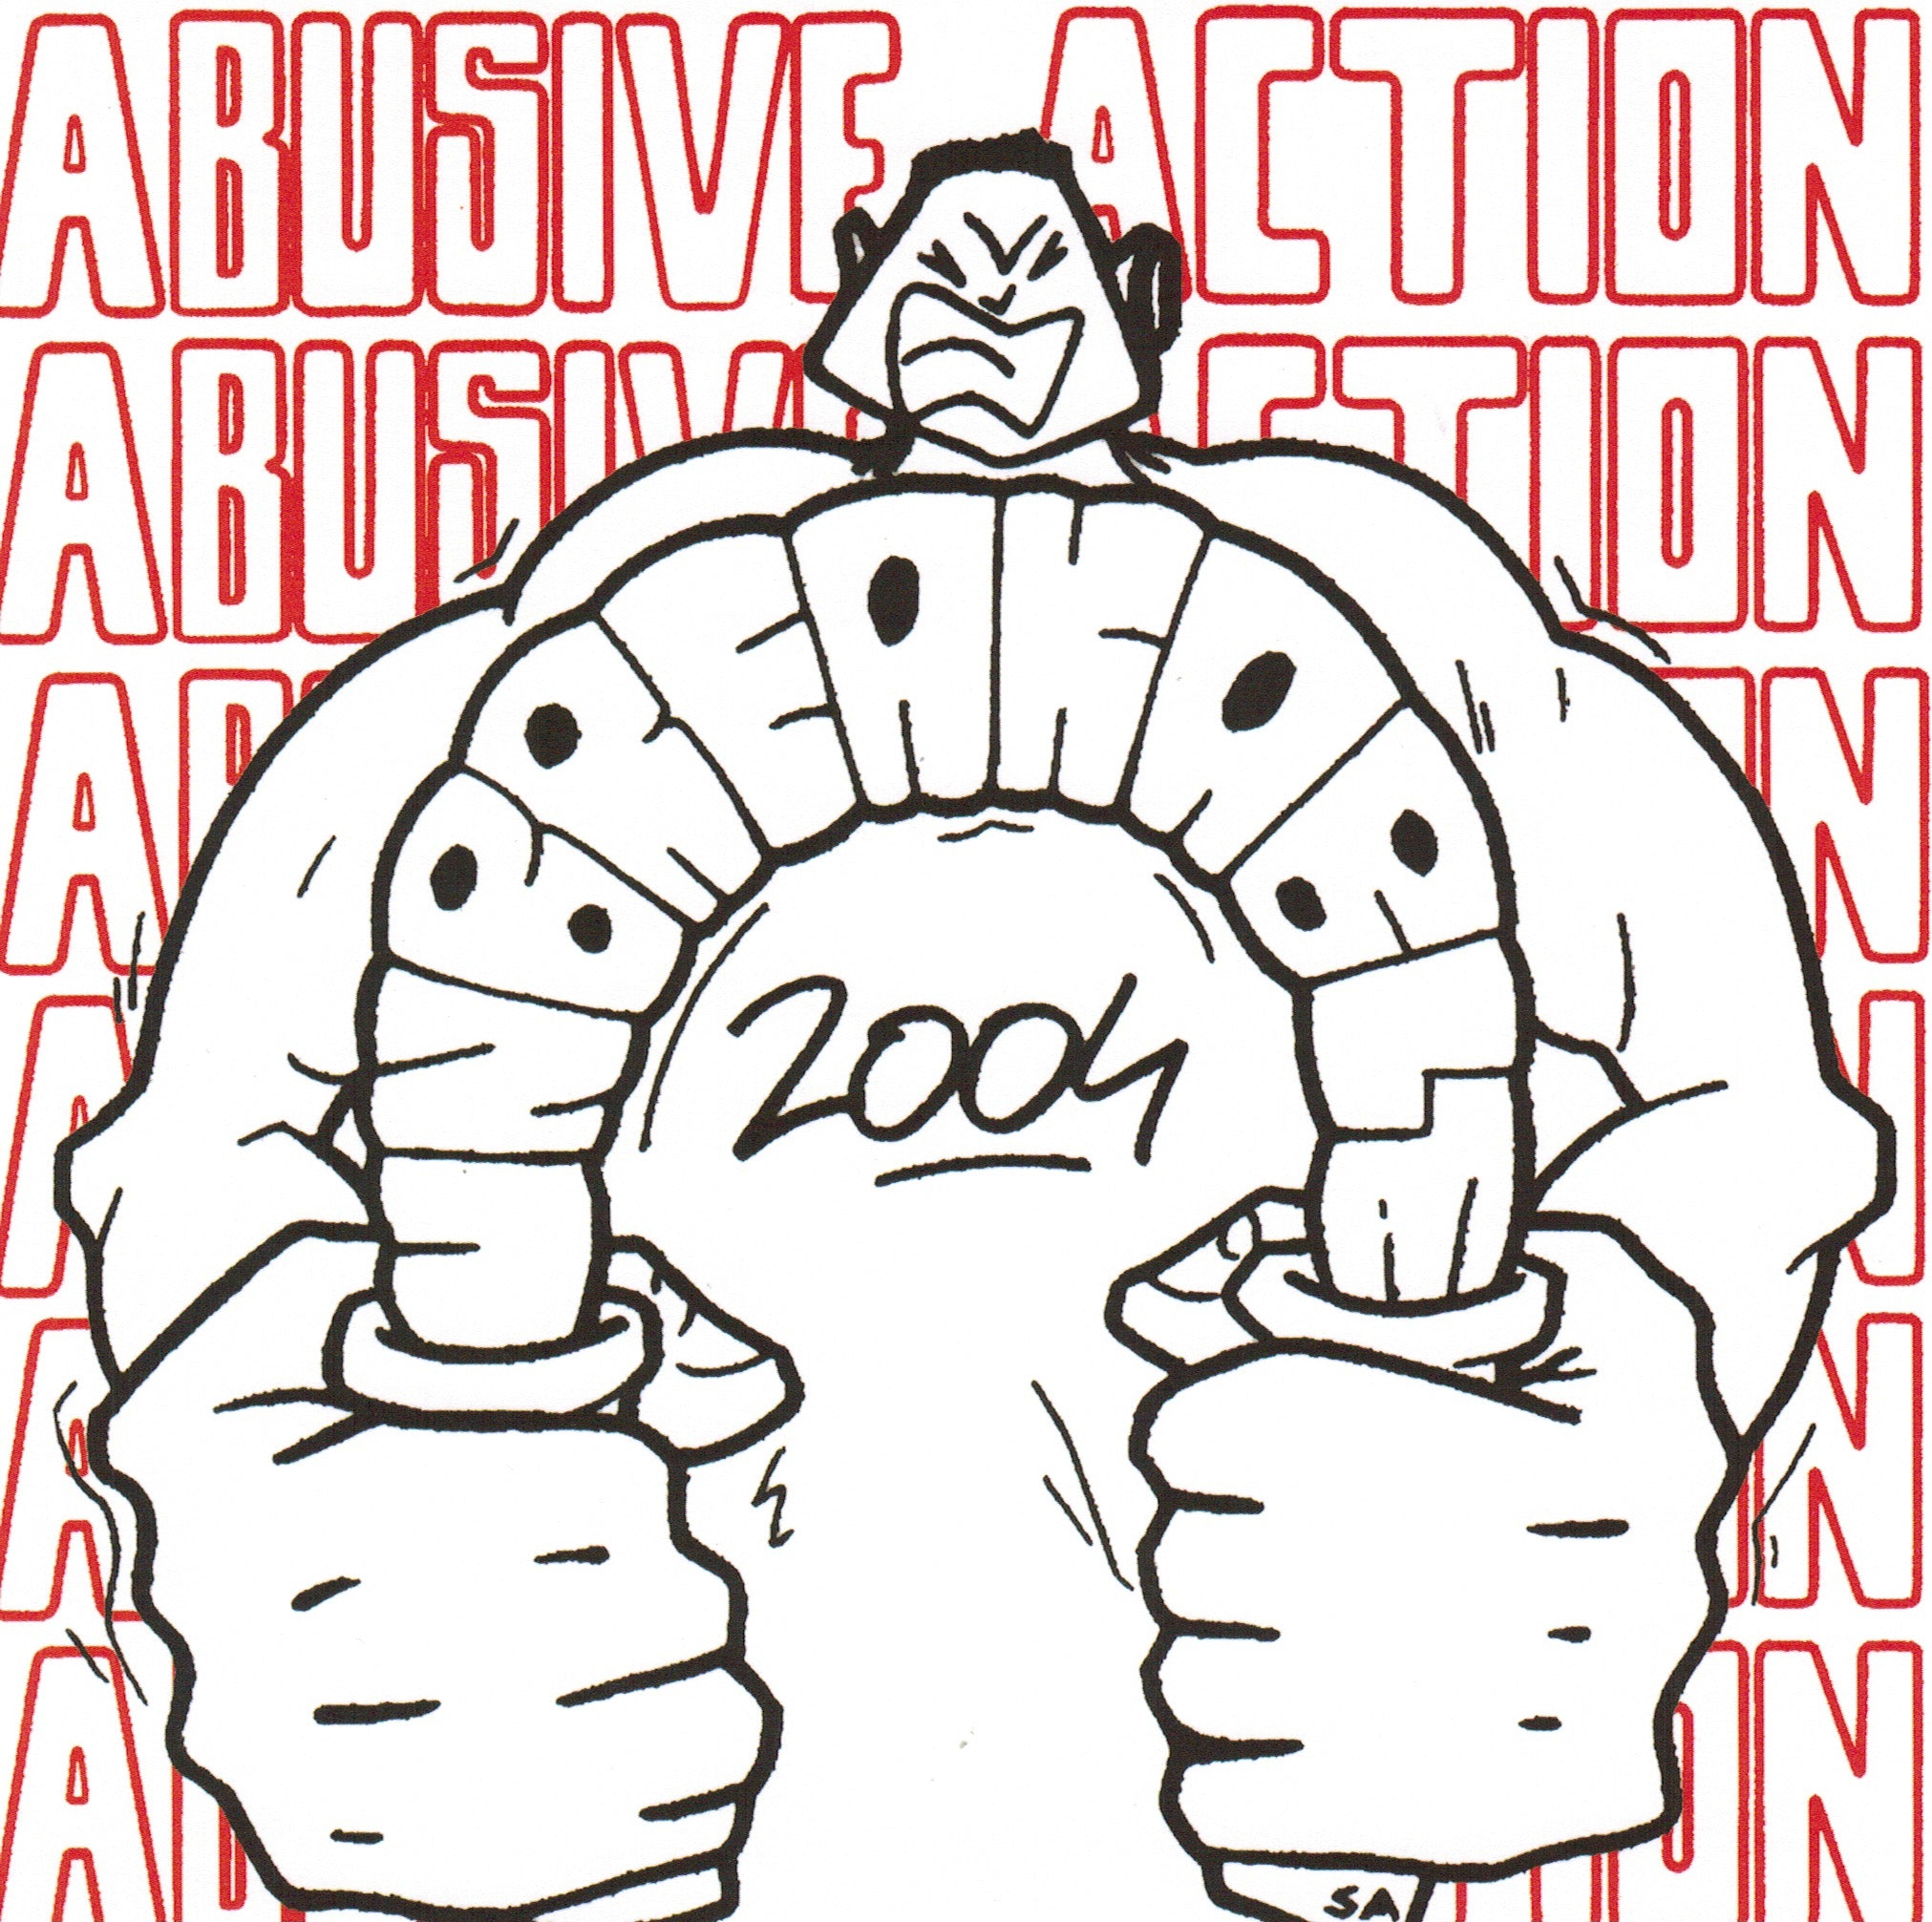 'VOICE OF A GENERATION' No.3 + Abusive Action 7" - Fanzine